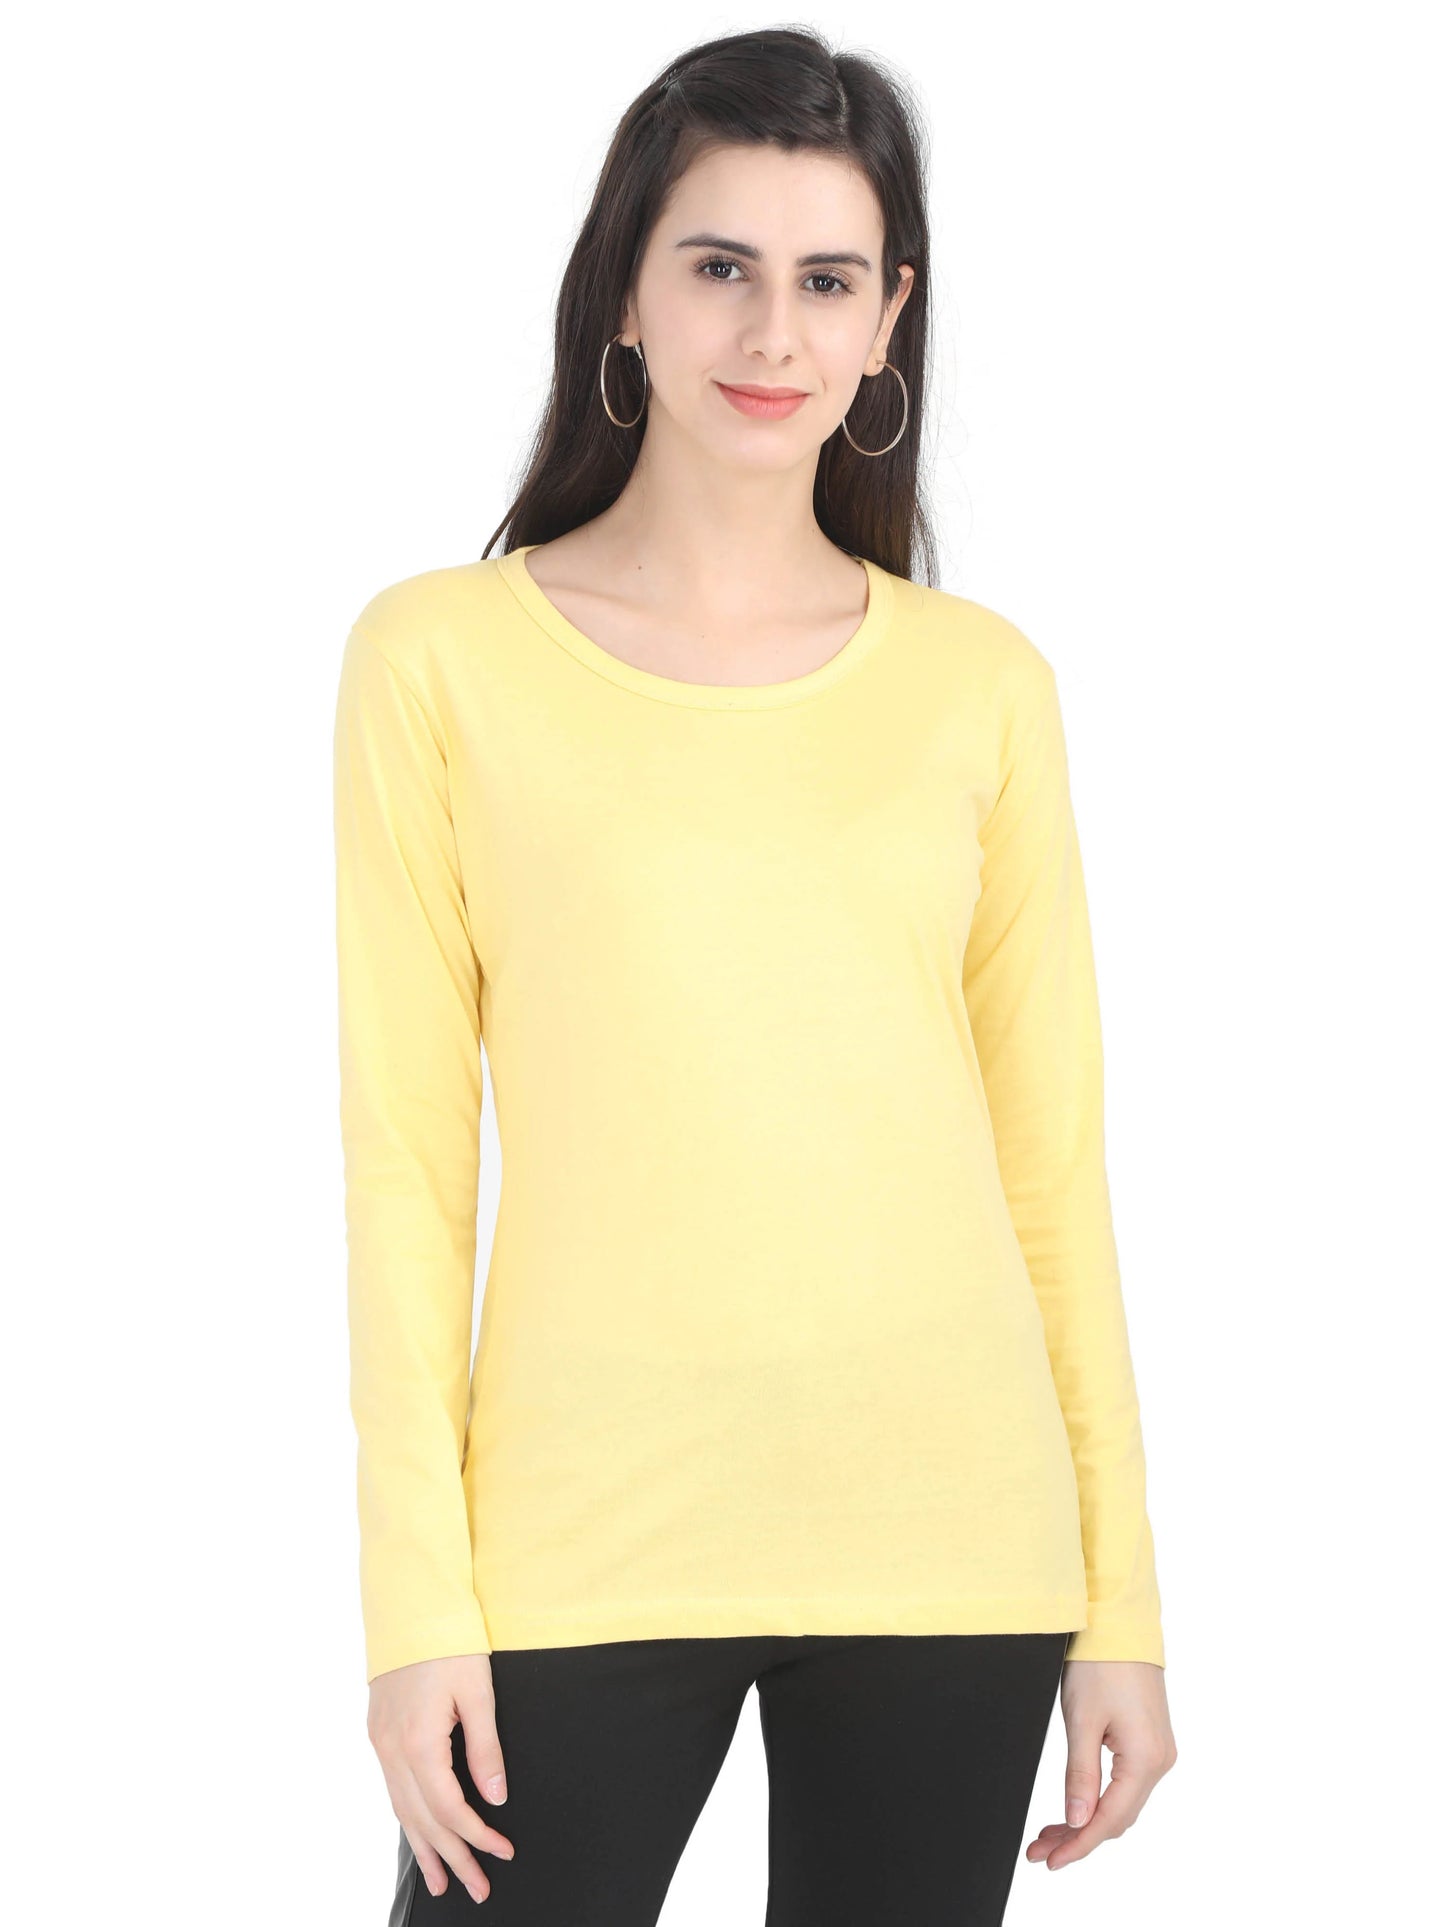 Women's Cotton Plain Round Neck Full Sleeve Yellow Color T-Shirt